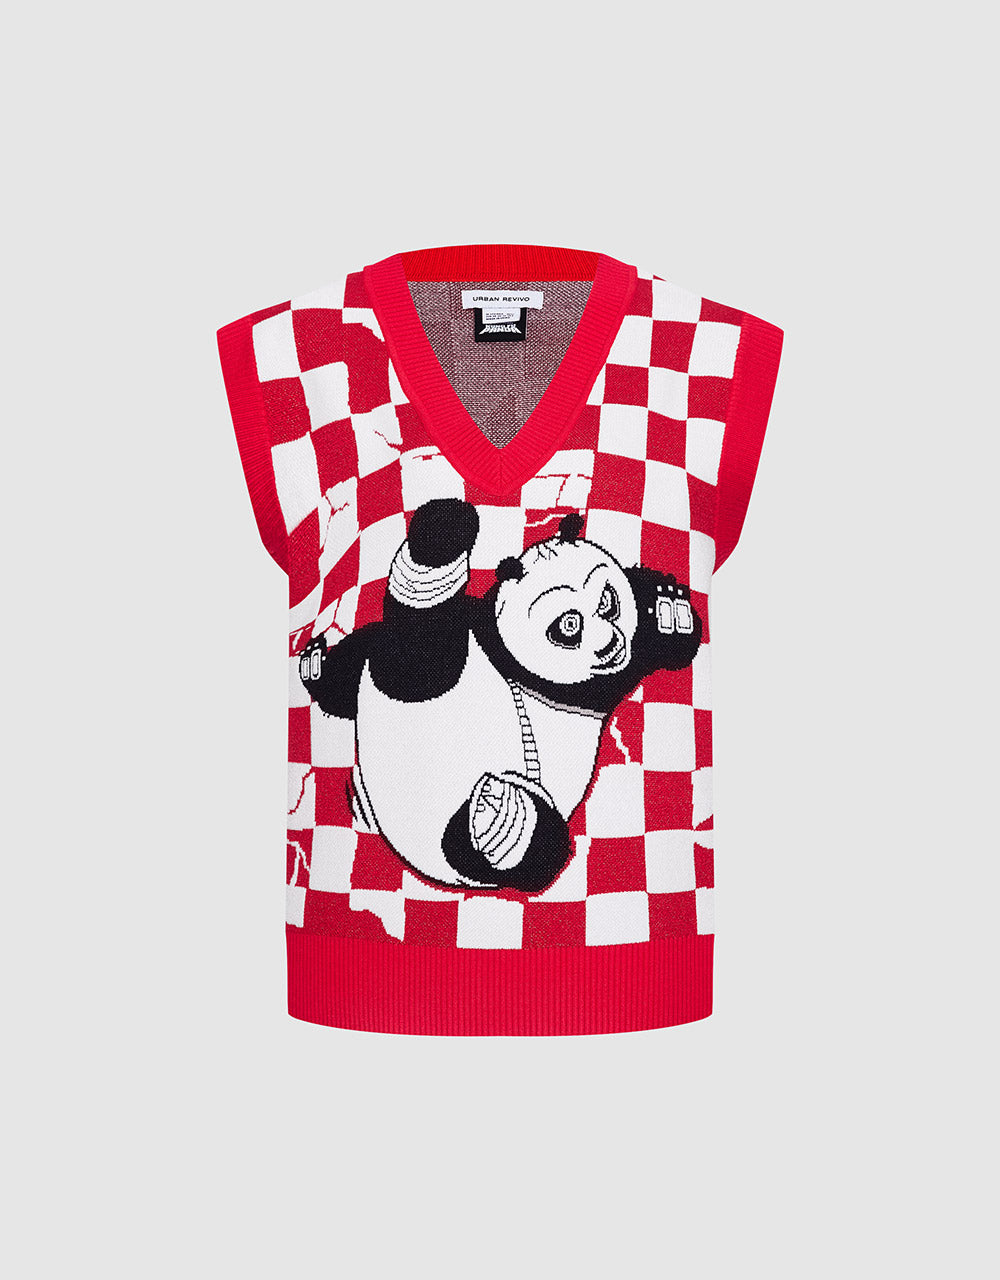 Fu Panda Checkered Sweater Vest Red Checkered